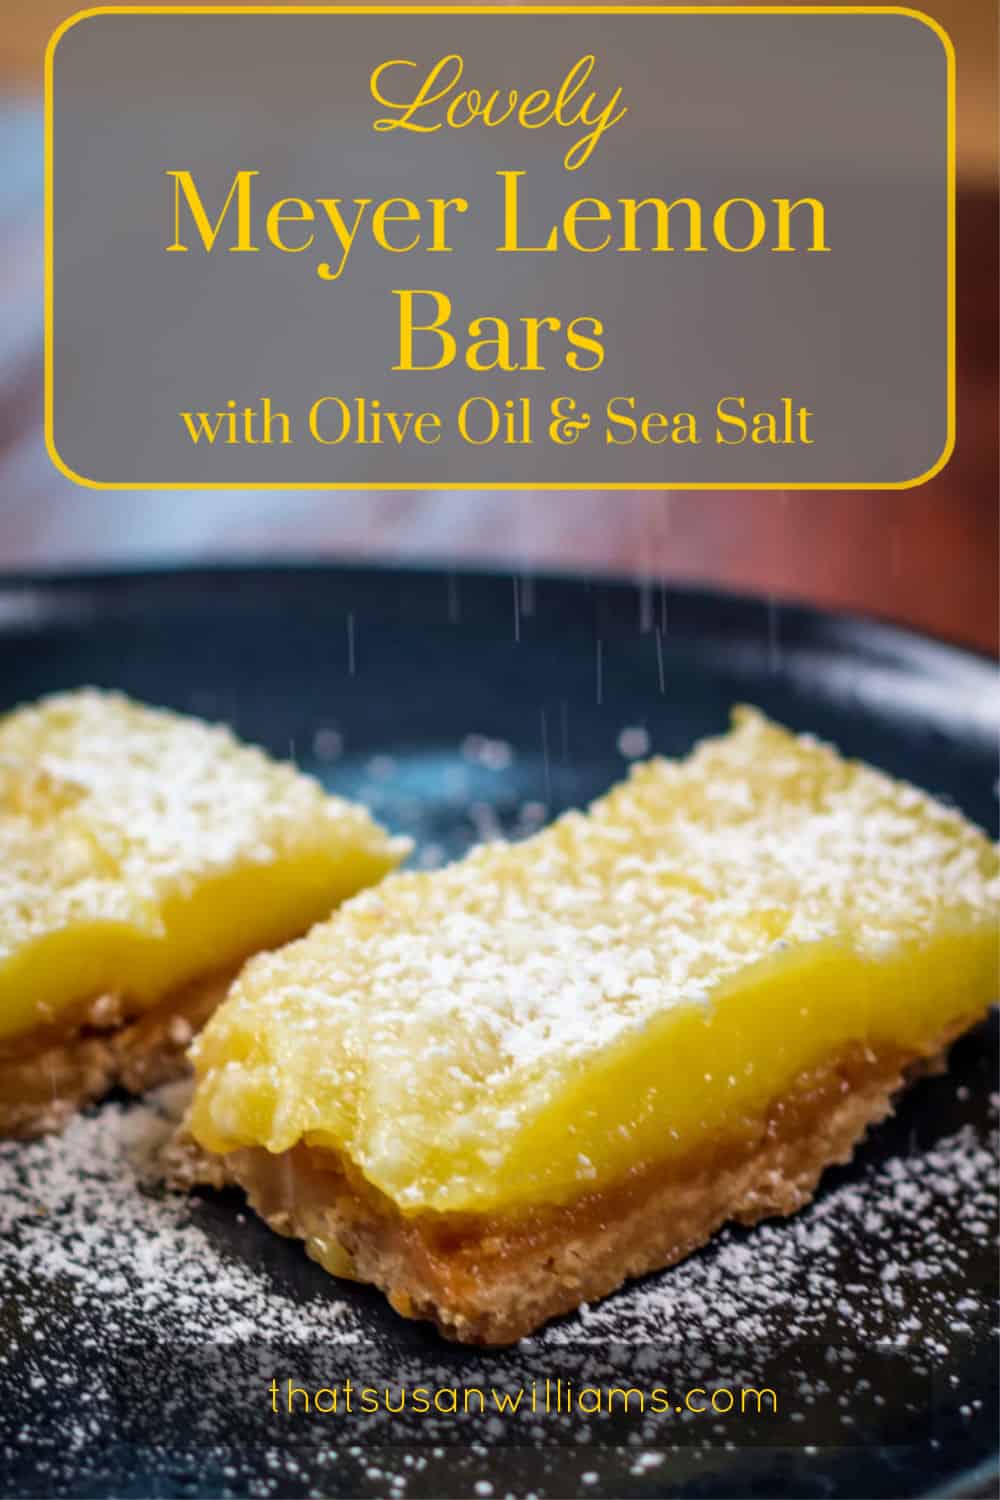 Lovely Meyer Lemon Bars with Olive Oil and Sea Salt